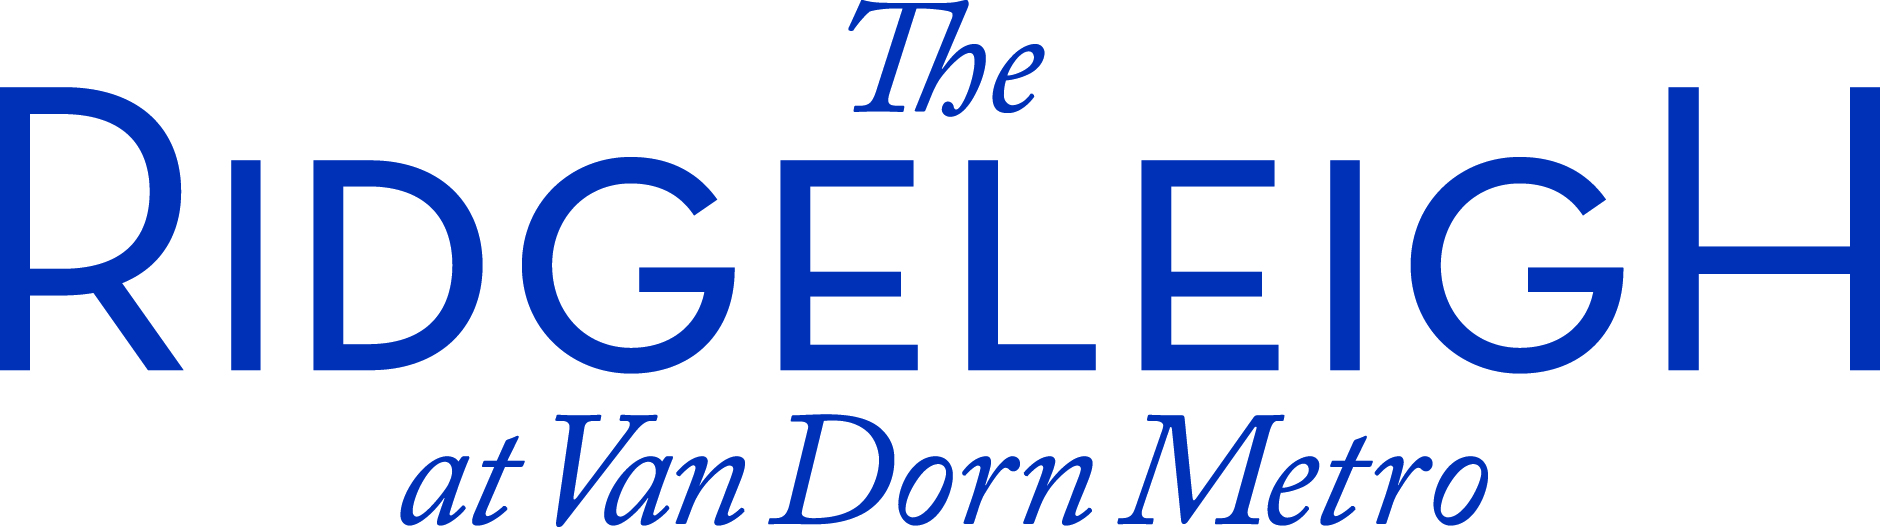 Ridgeleigh at Van Dorn Logo